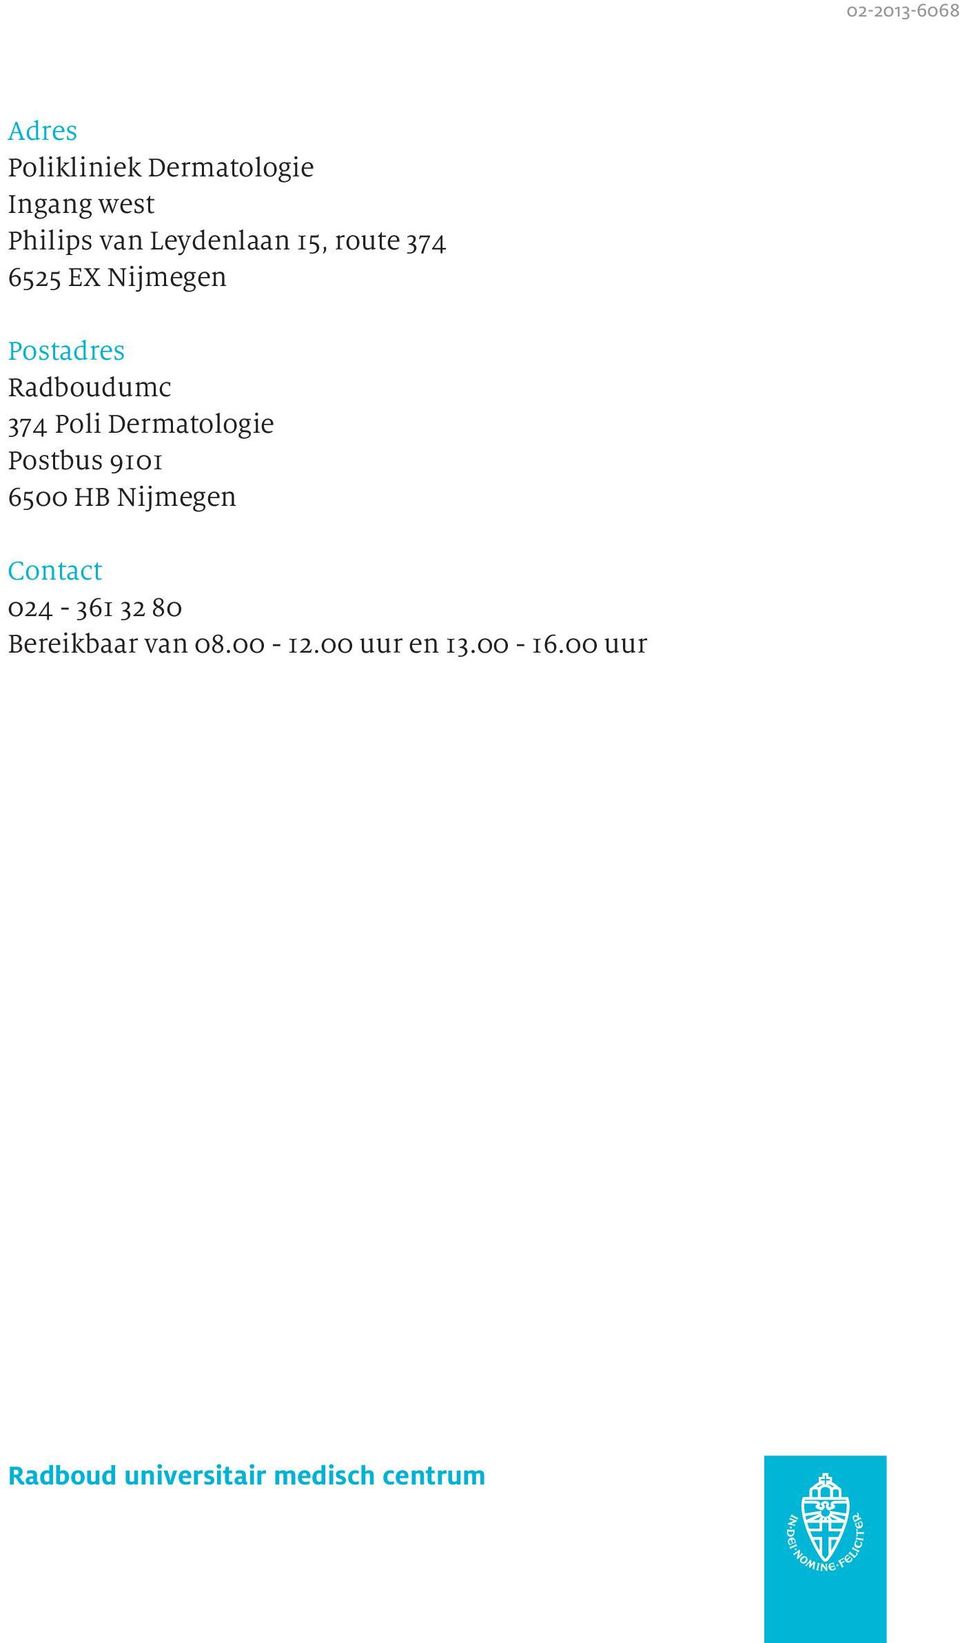 Dermatologie Postbus 9101 6500 HB Nijmegen Contact 024-361 32 80